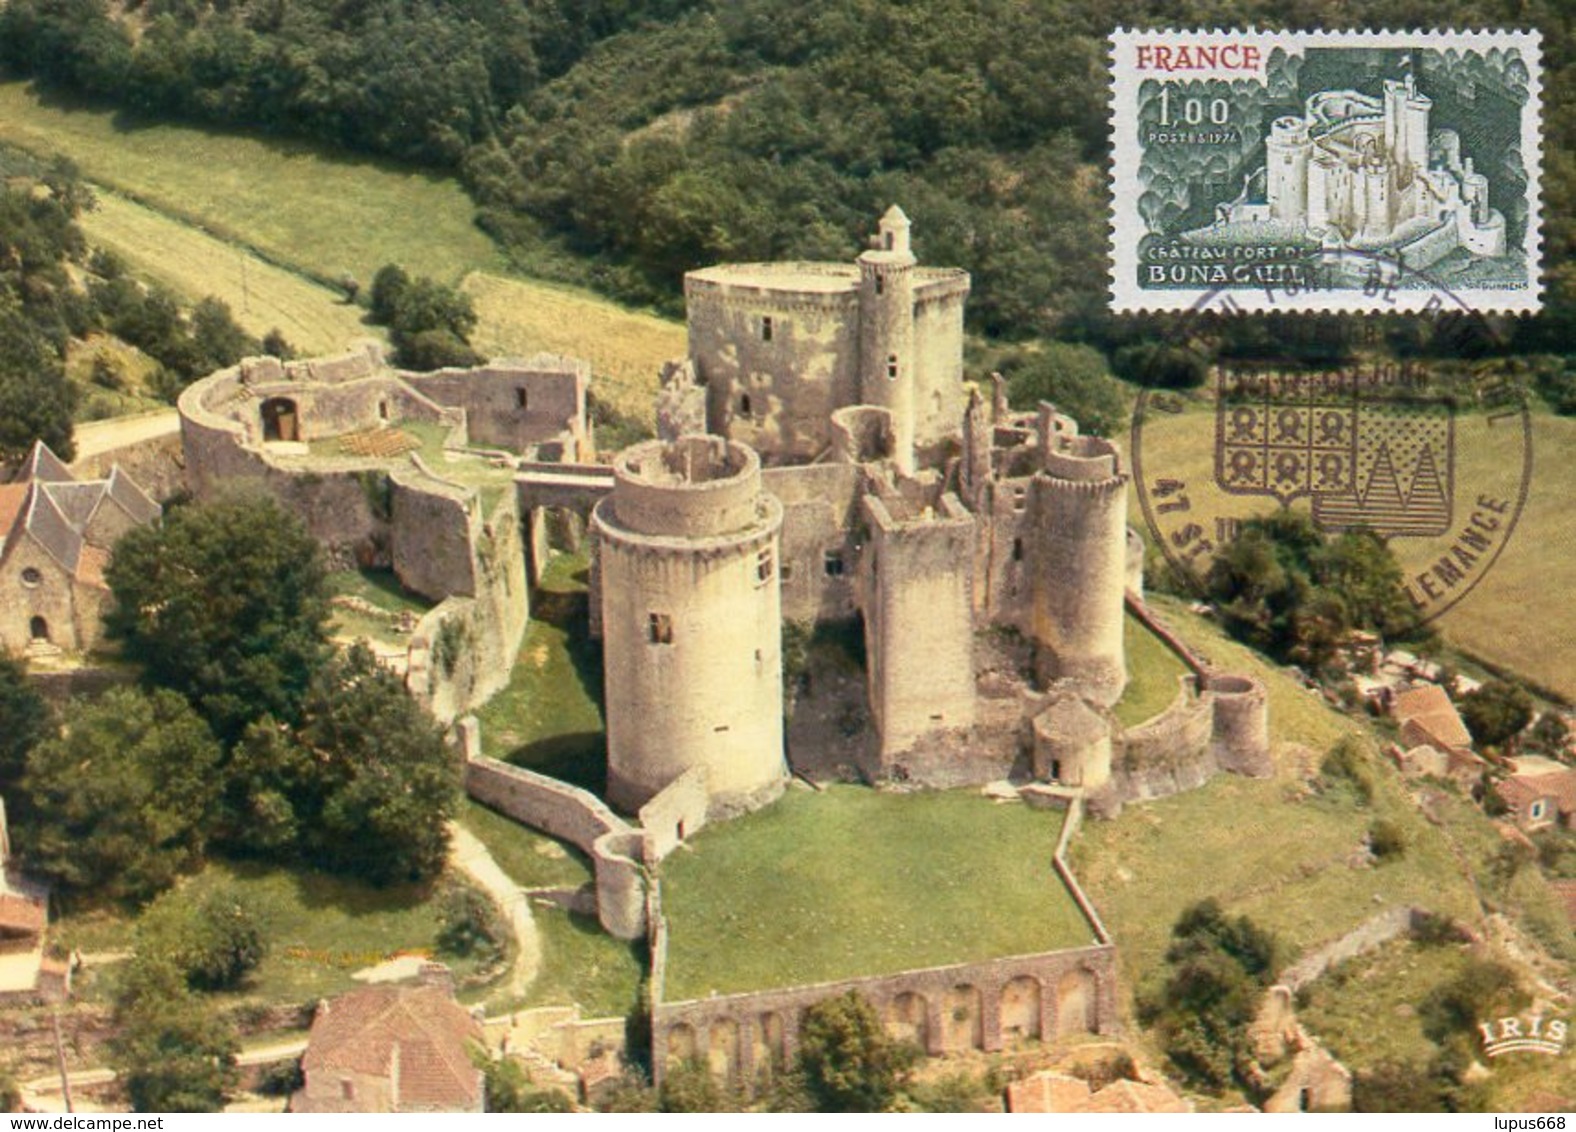 Frankreich  1976  MiNr. 1976  Maximumkarte ; Château Fort De Bonaguil - Schlösser U. Burgen